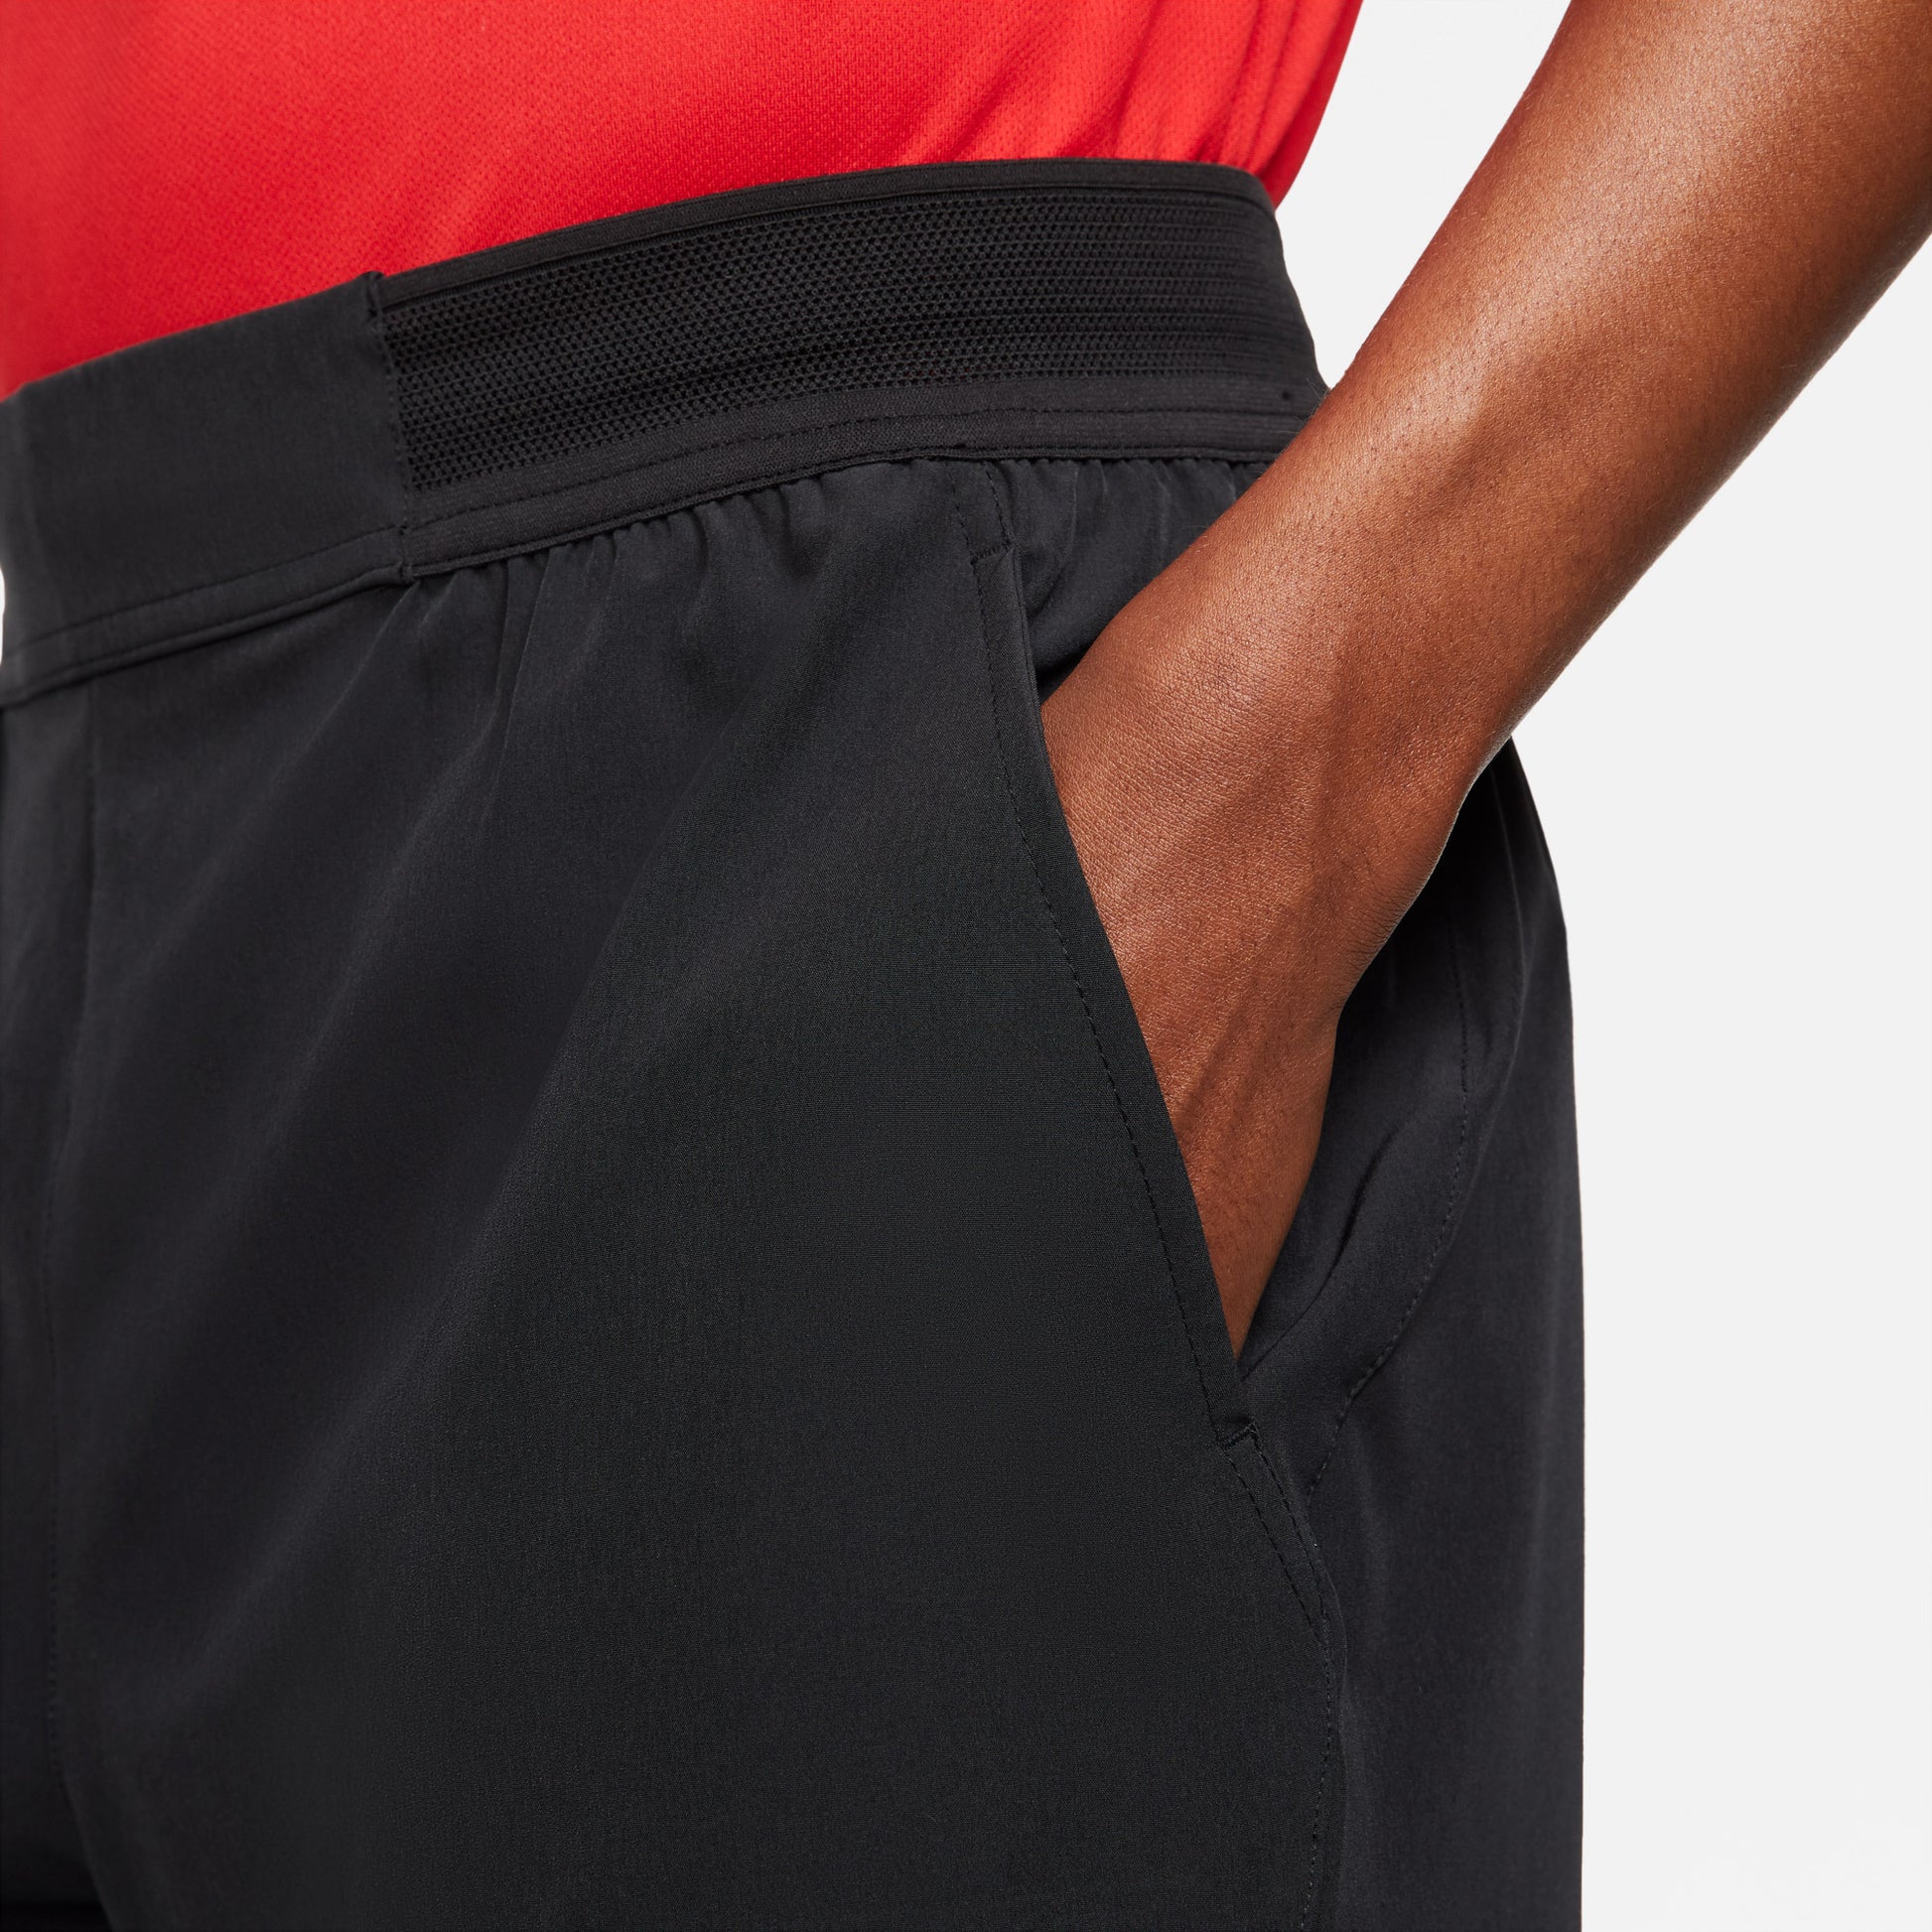 Nike Flex Advantage Men's 9-Inch Tennis Shorts Black (5)